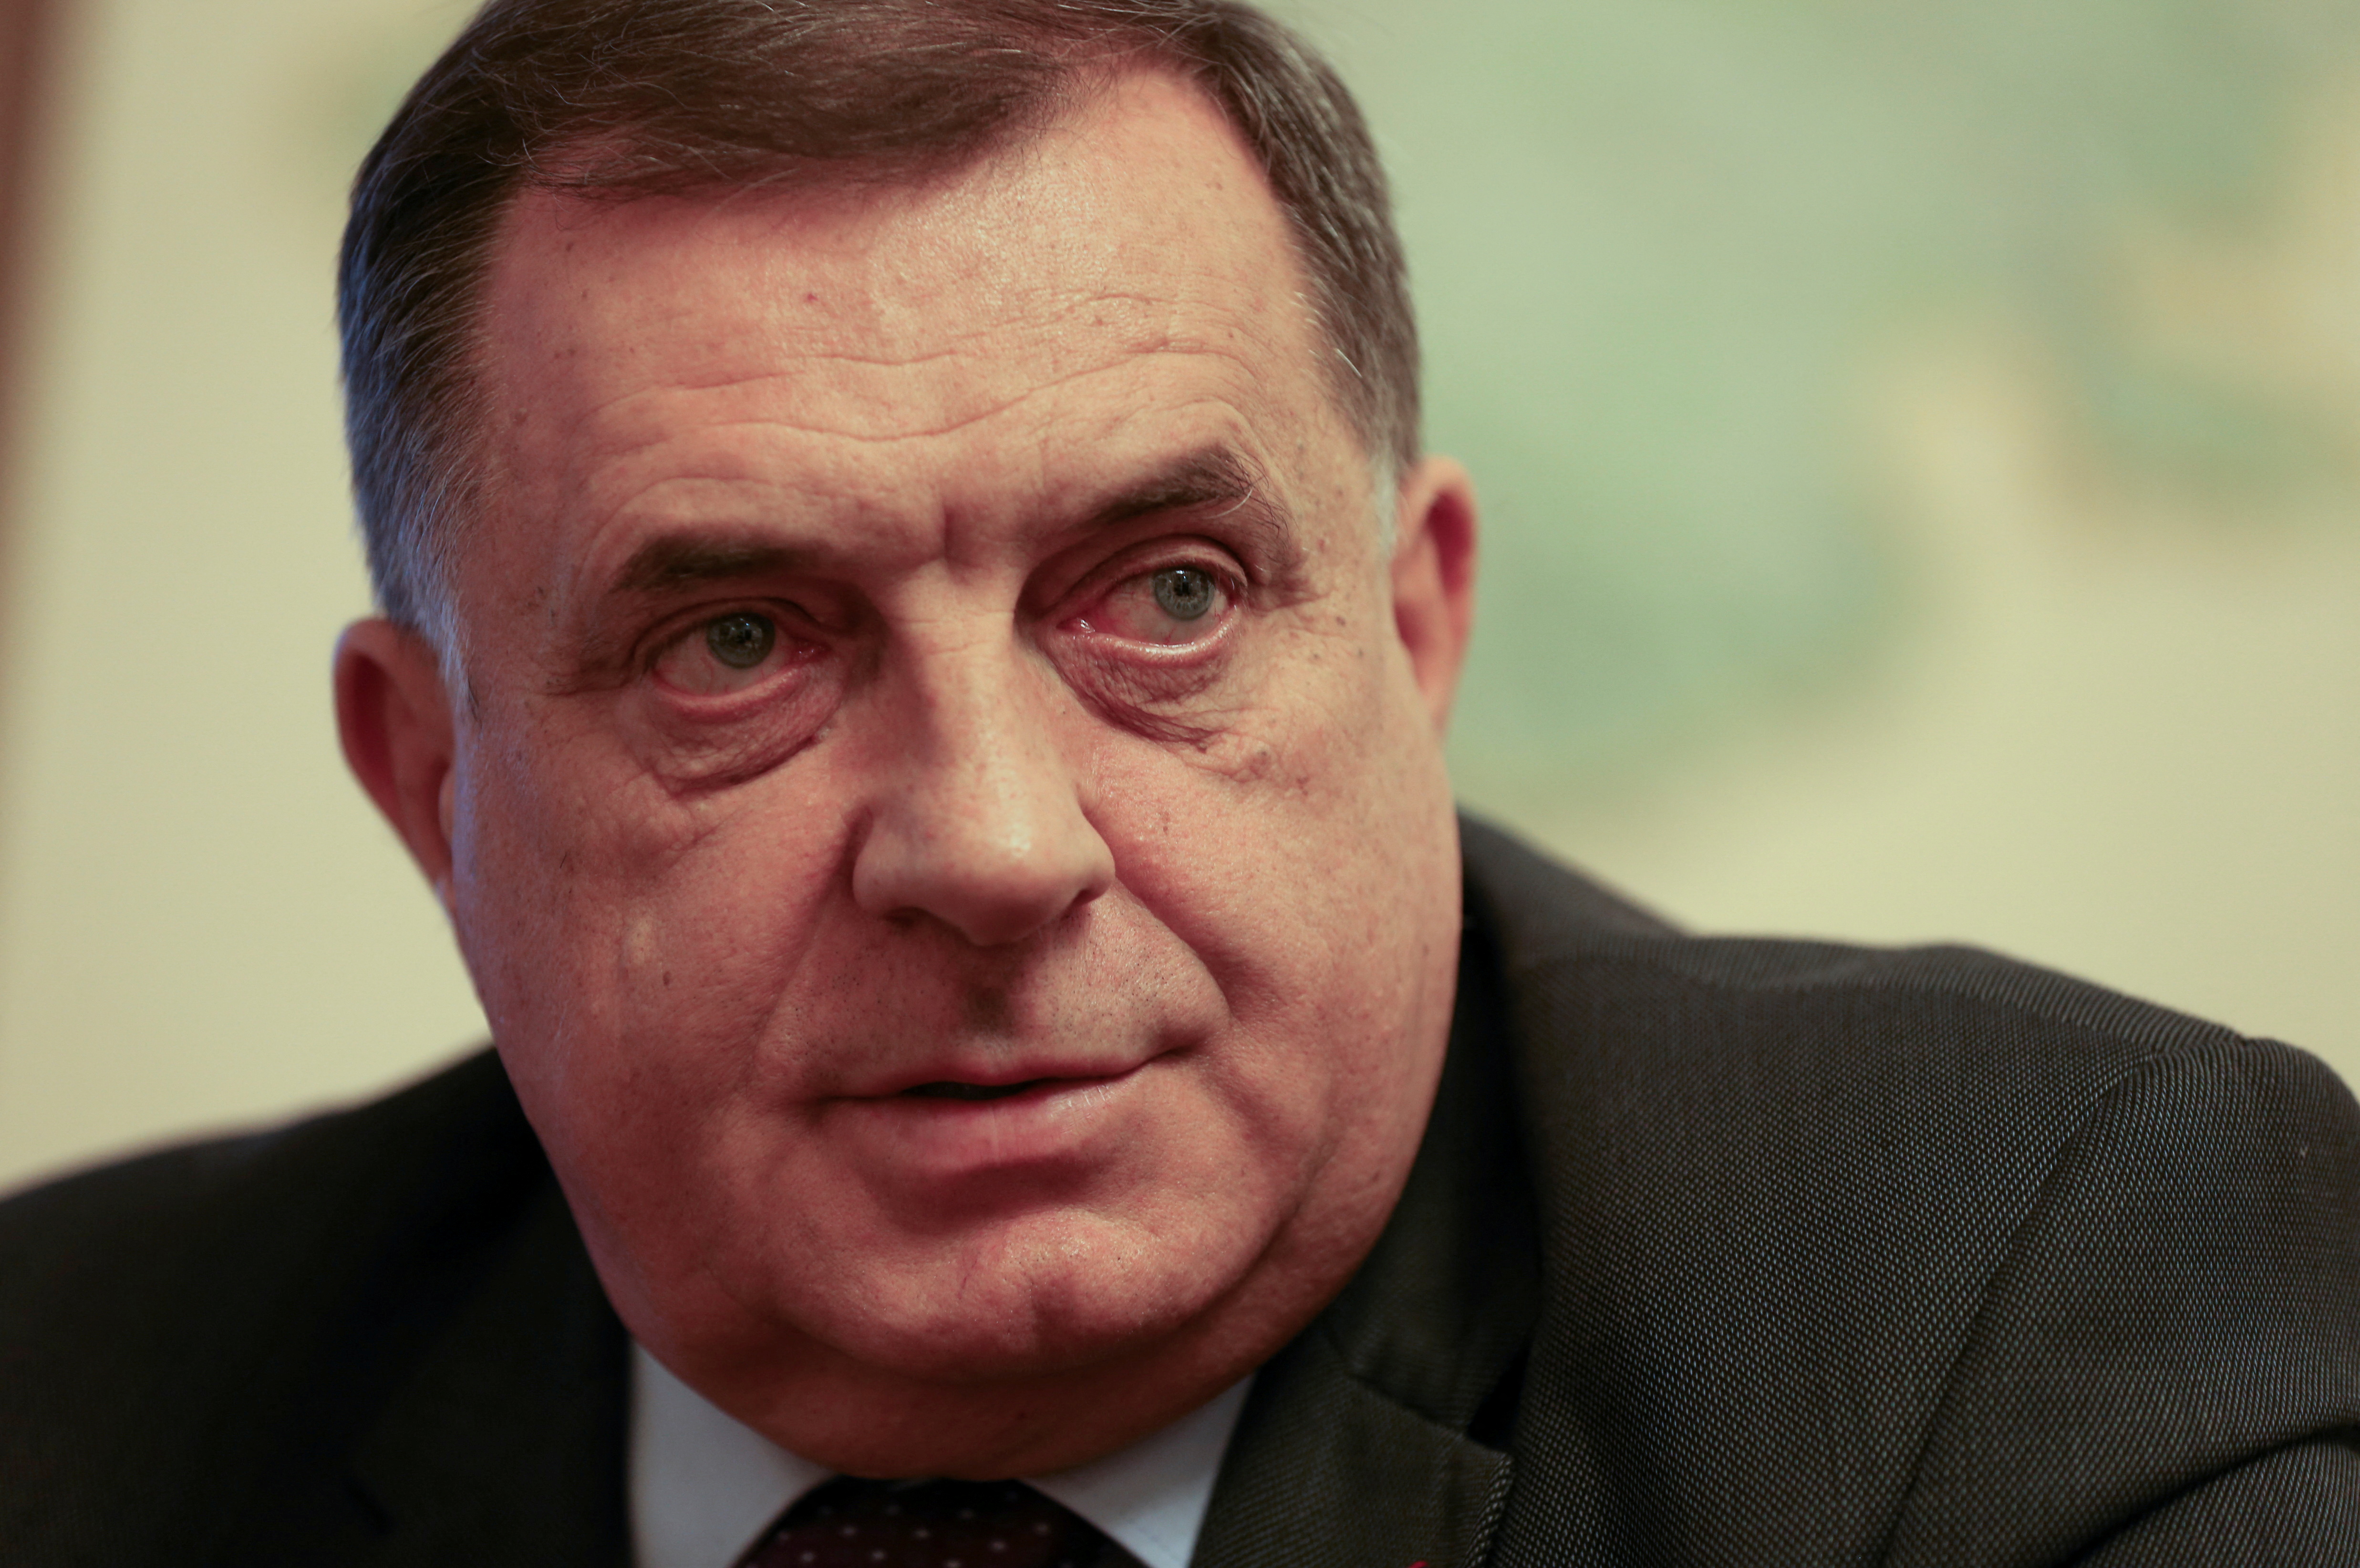 Milorad Dodik, Serb member of the Presidency of Bosnia and Herzegovina speaks during interview in his office in Banja Luka